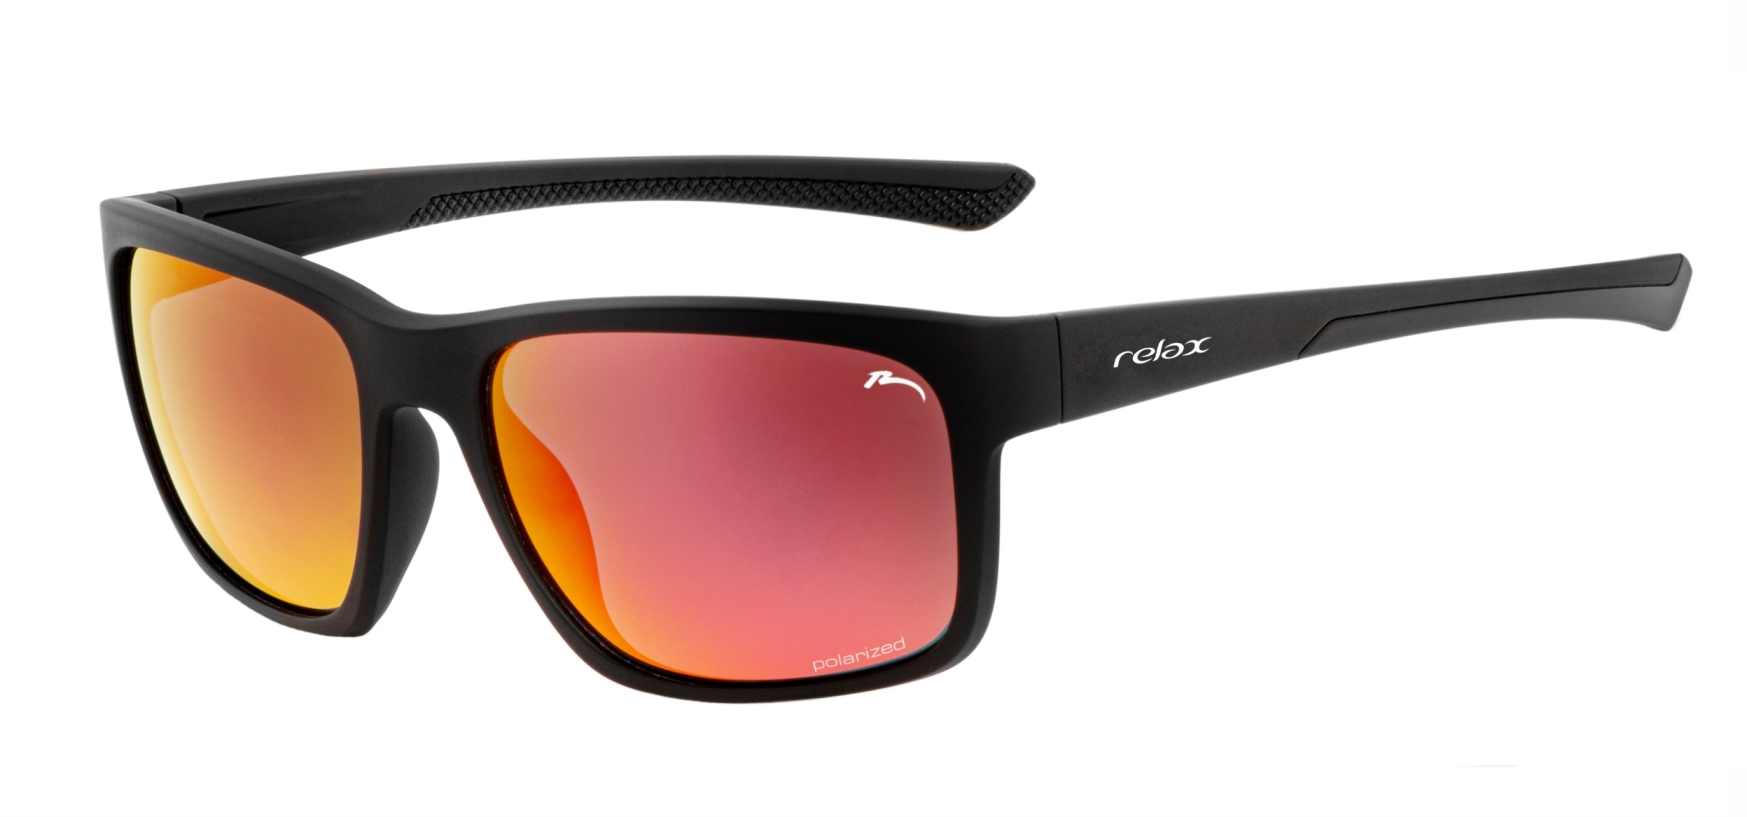 Polarized sunglasses  Relax Peaks R2345C standard